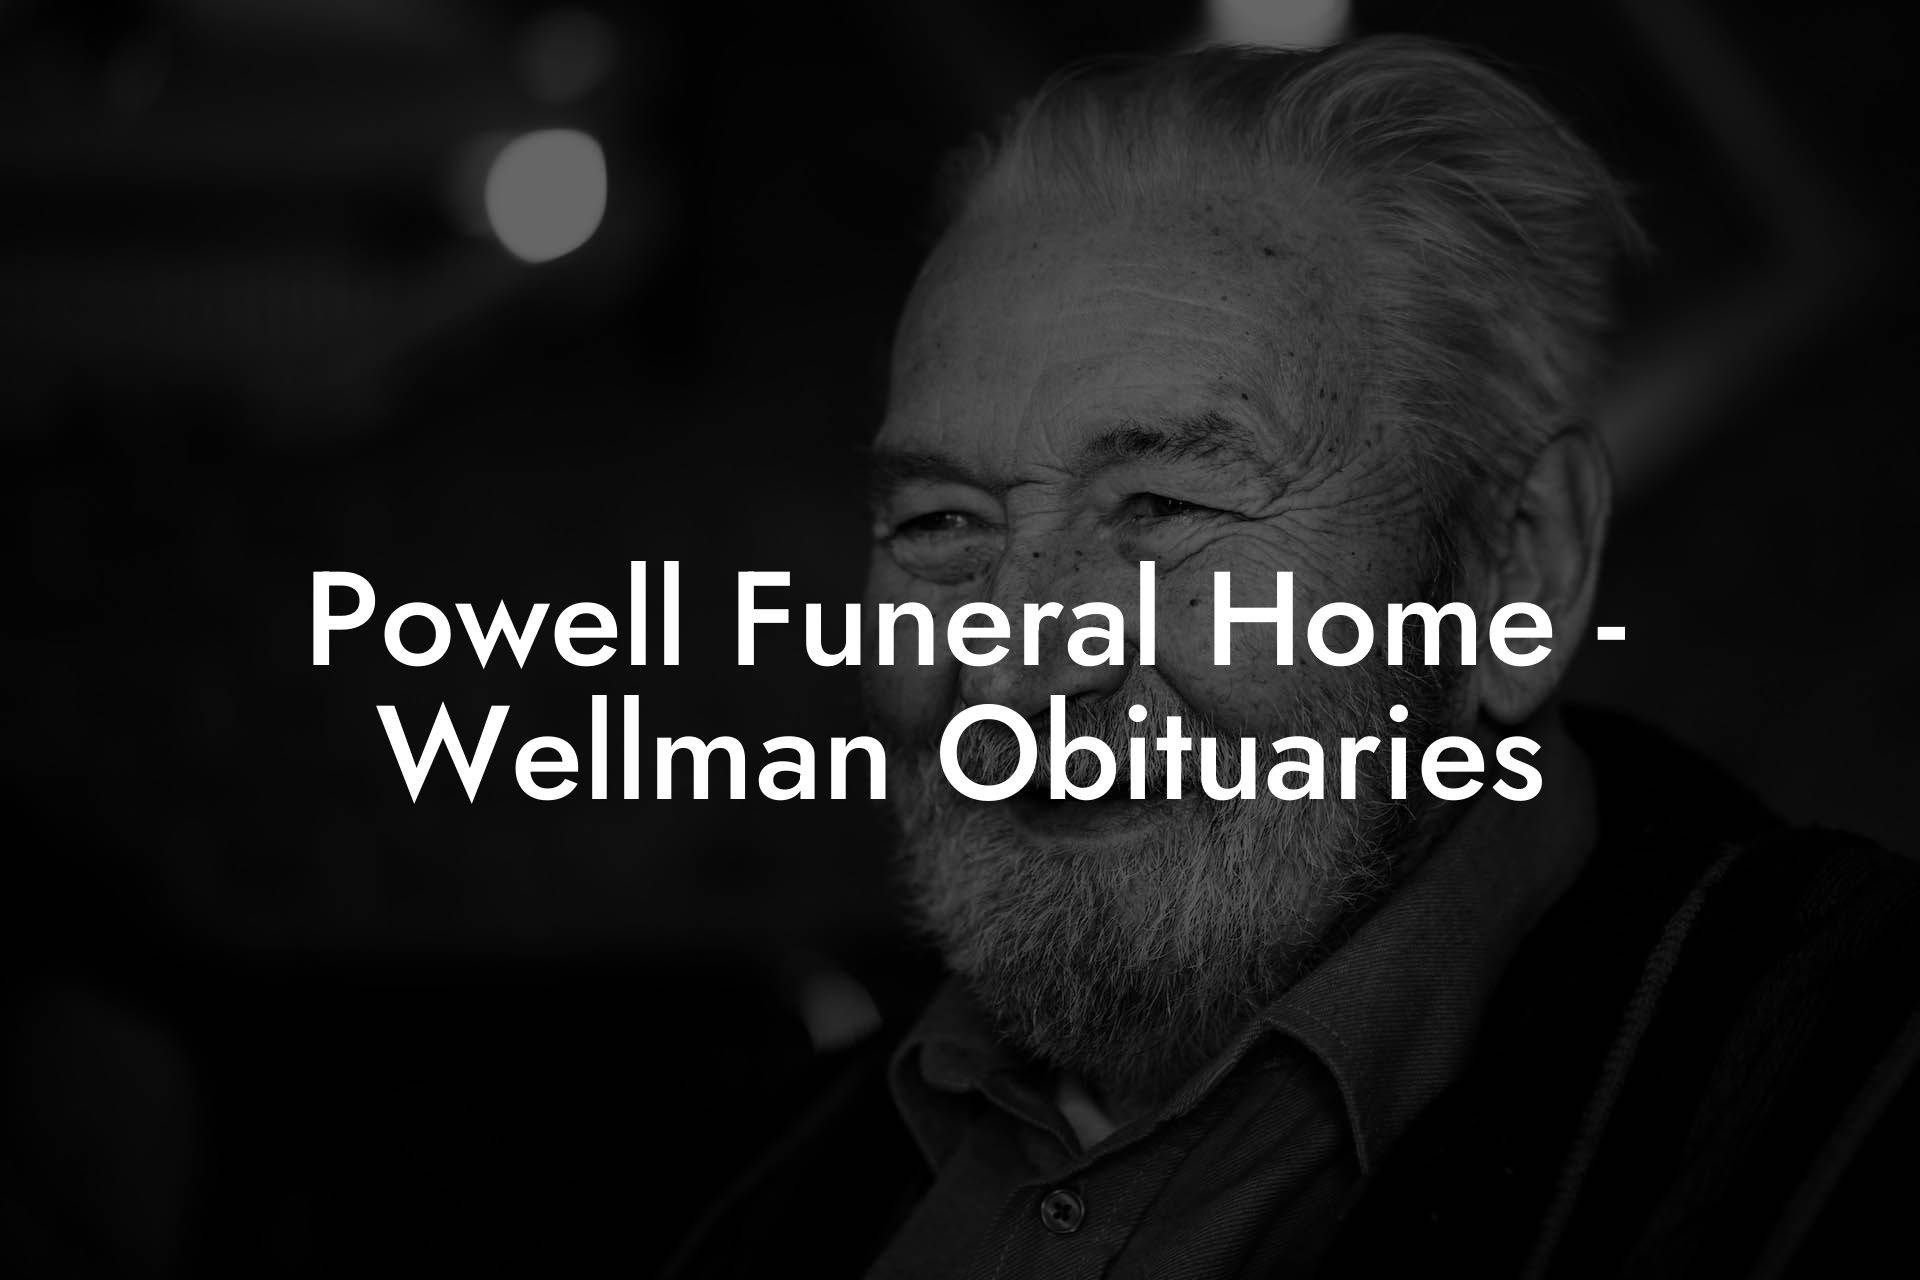 Powell Funeral Home - Wellman Obituaries